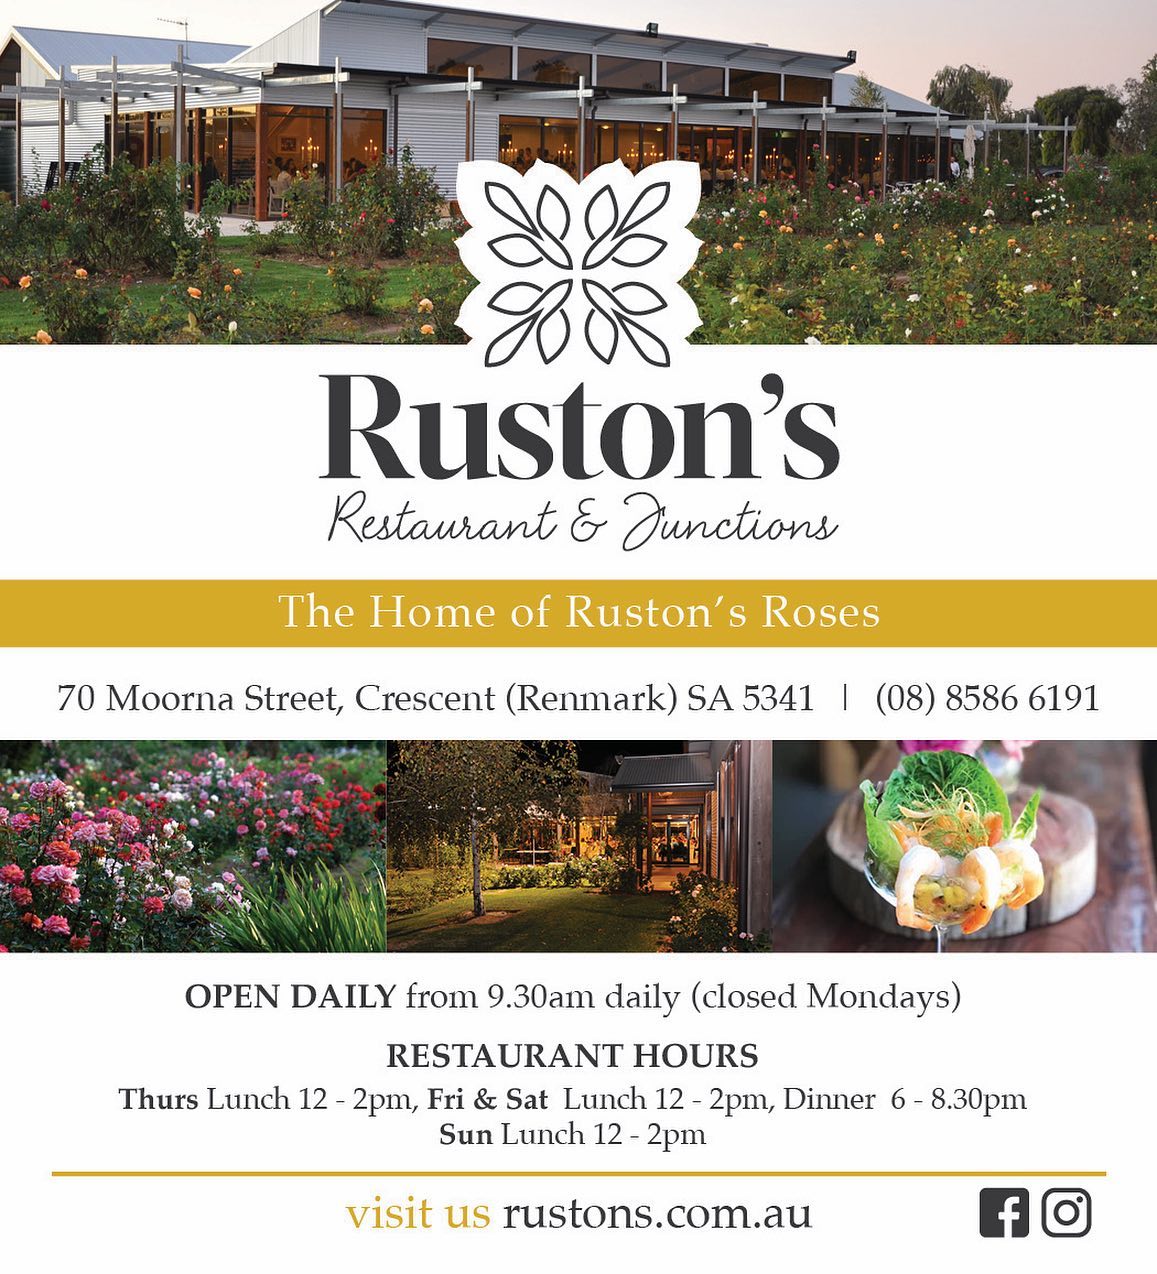 Ruston's Restaurant & Functions